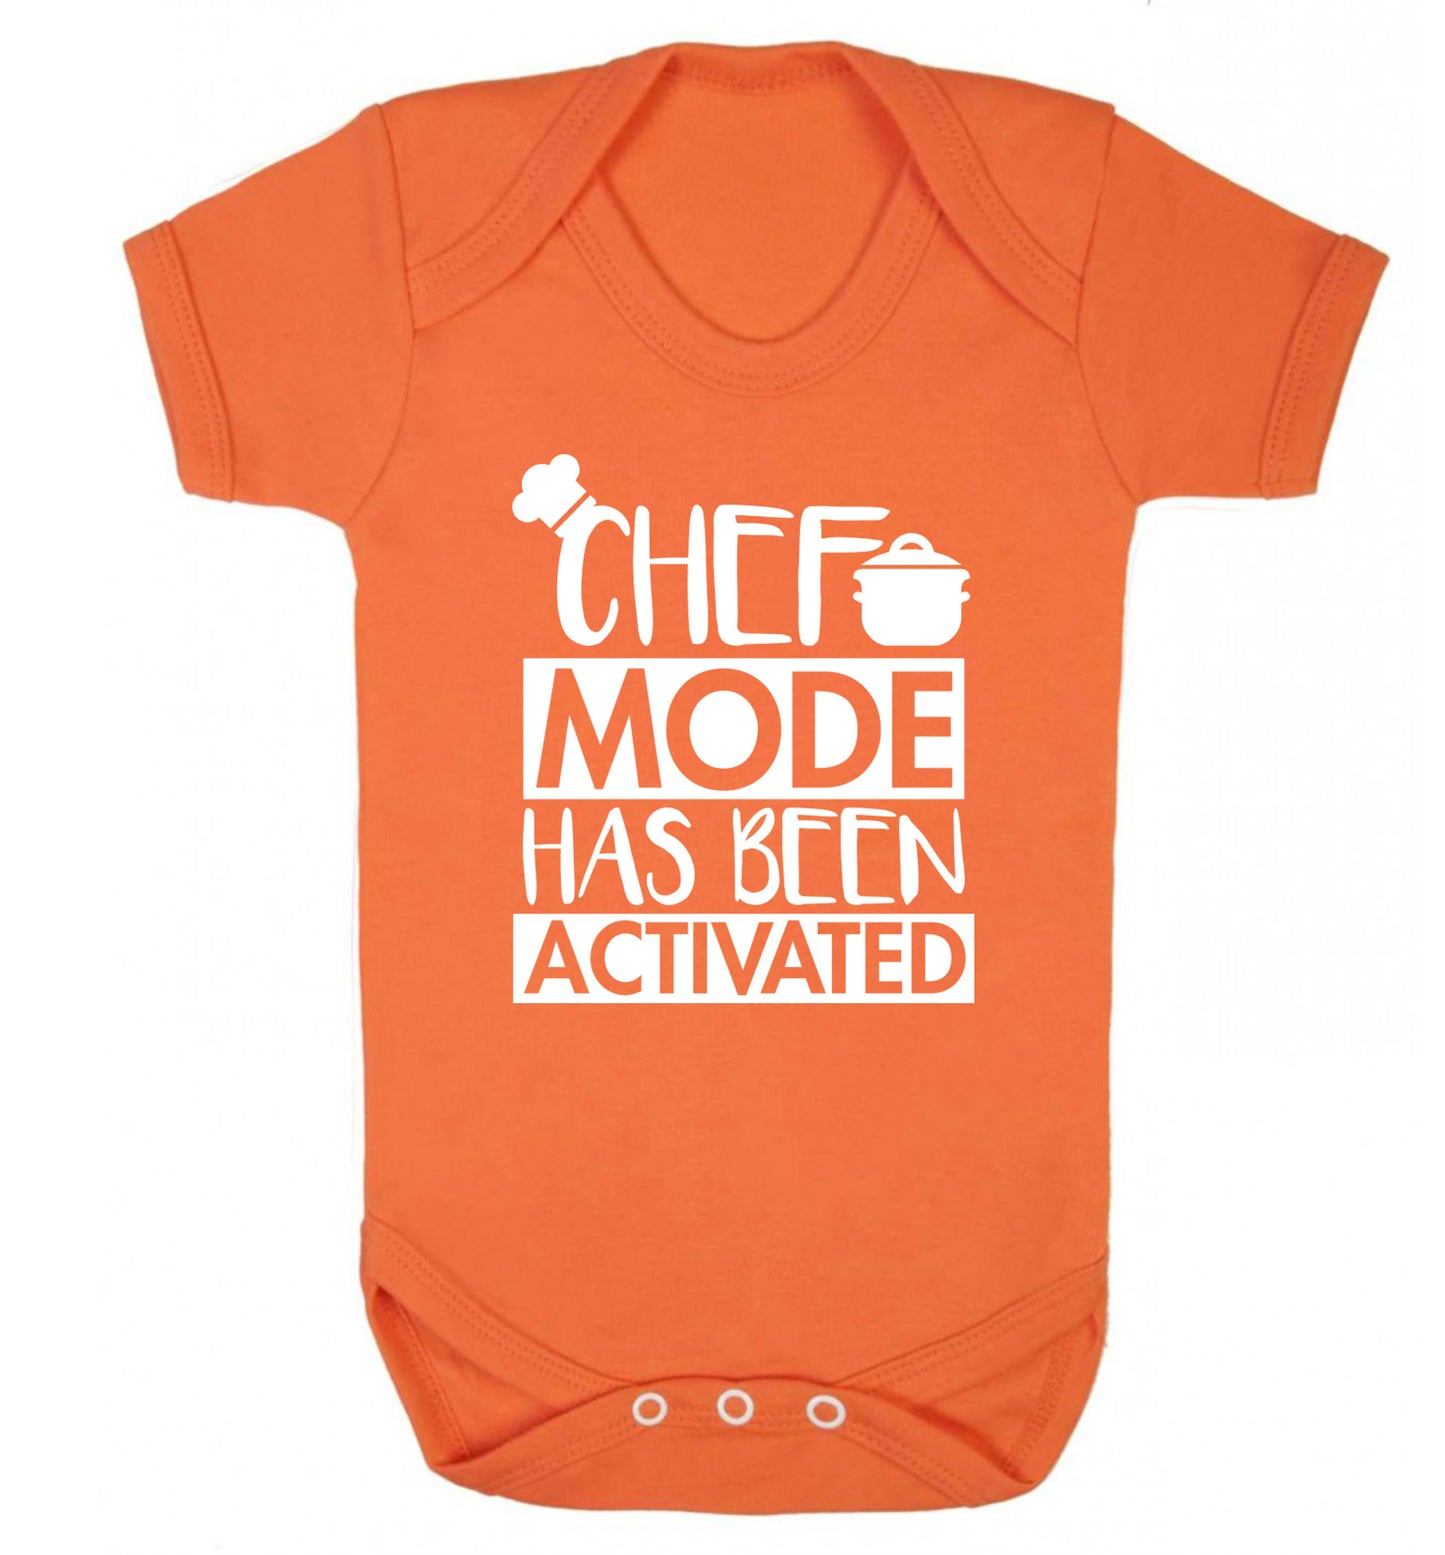 Chef mode has been activated Baby Vest orange 18-24 months